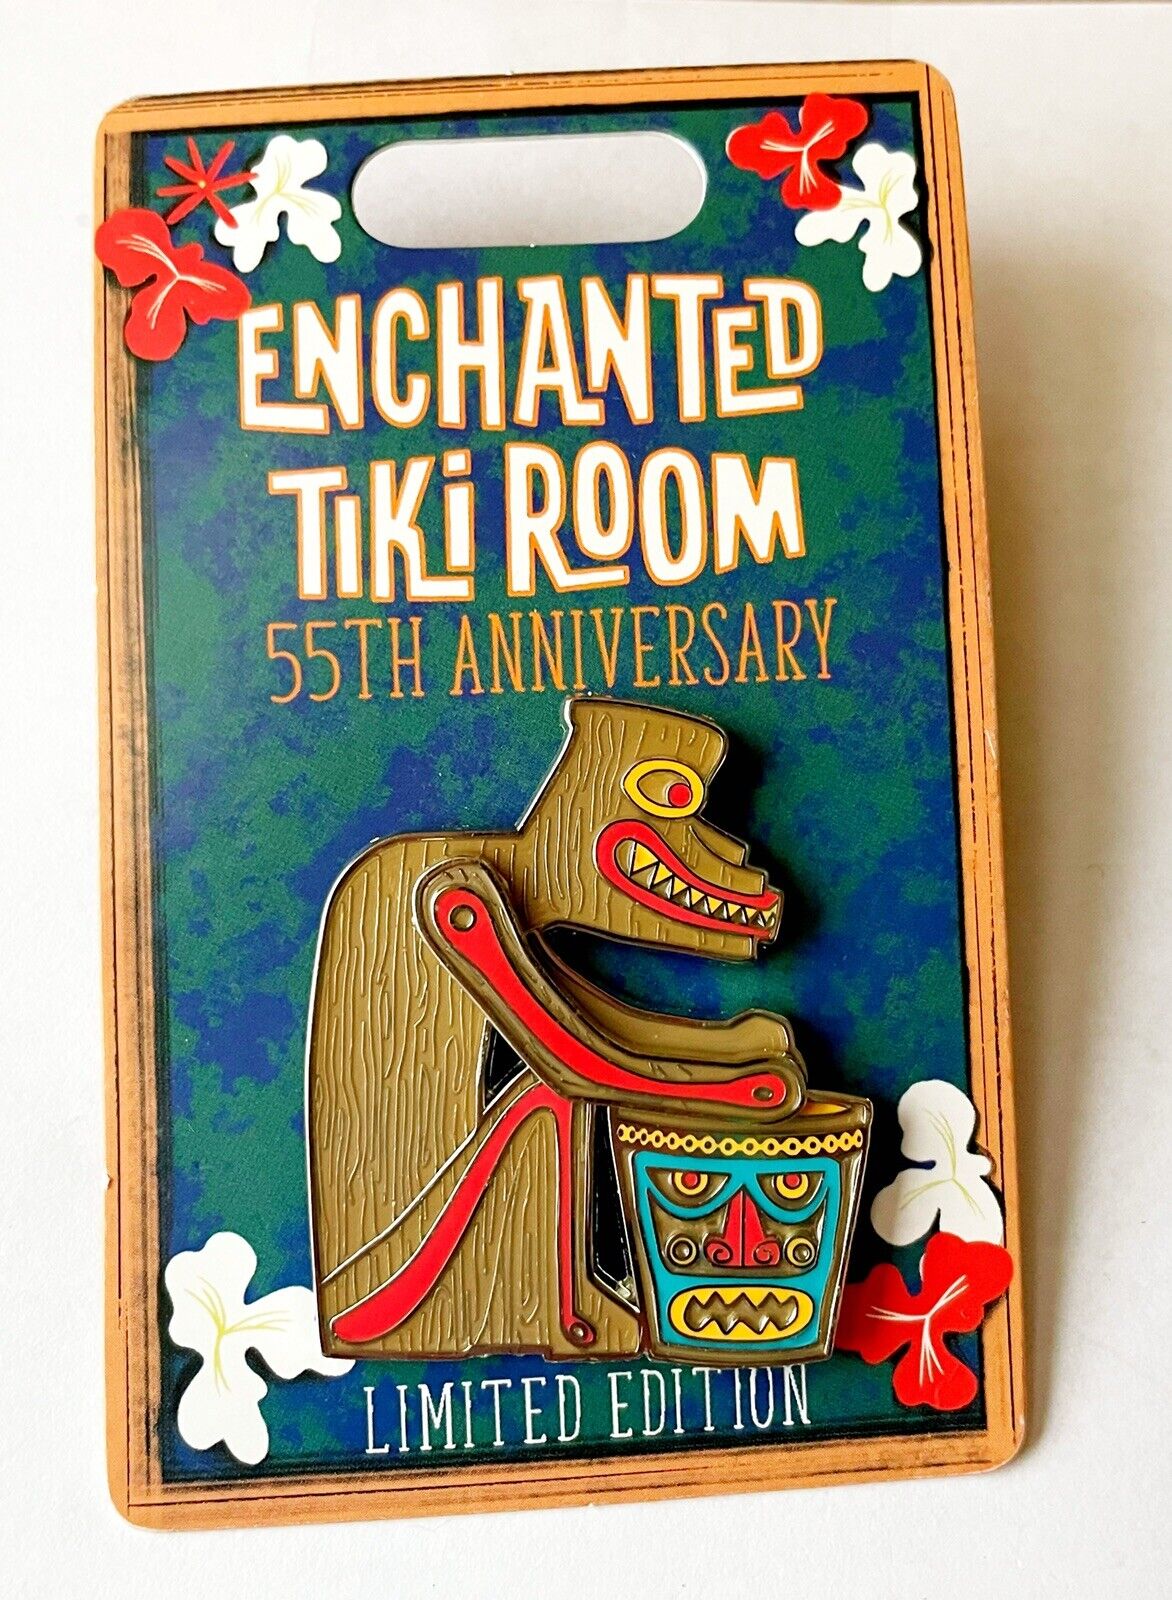 Enchanted Tiki Room 55th Anniversary Drum DLR Disneyland LE Disney Pin